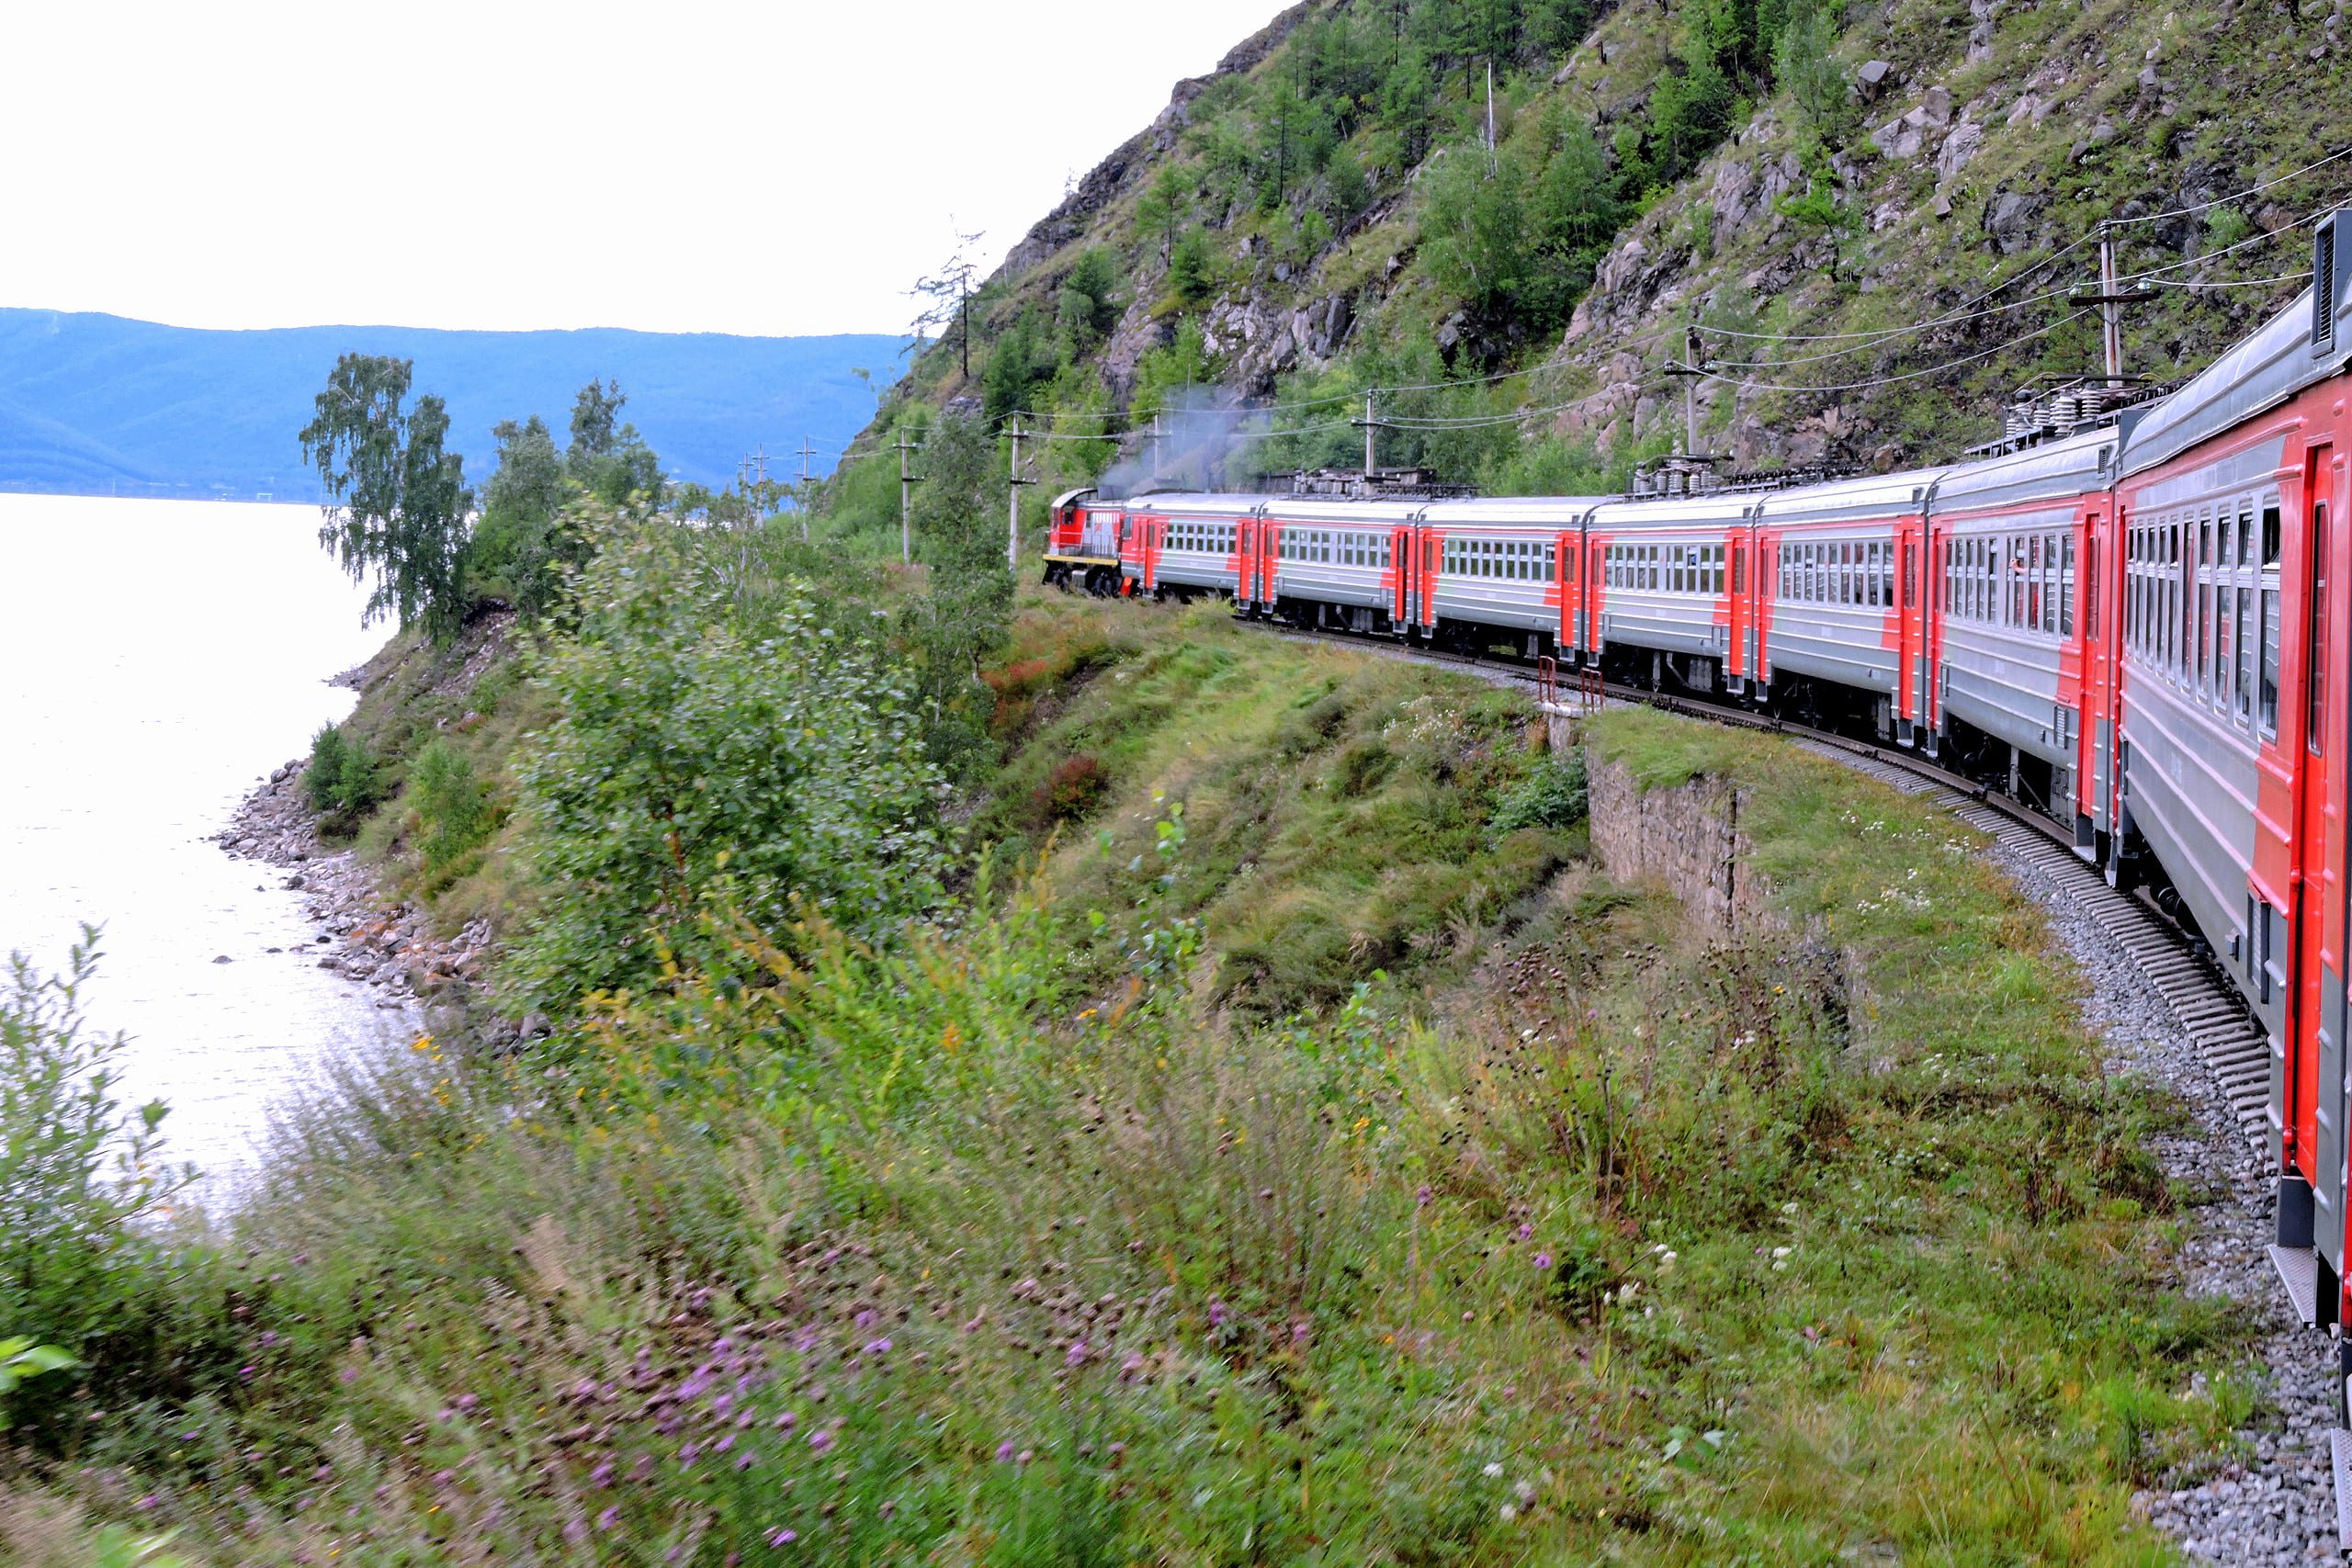 Trans-Siberian Railway Tour – An Epic Train Journey across Russia